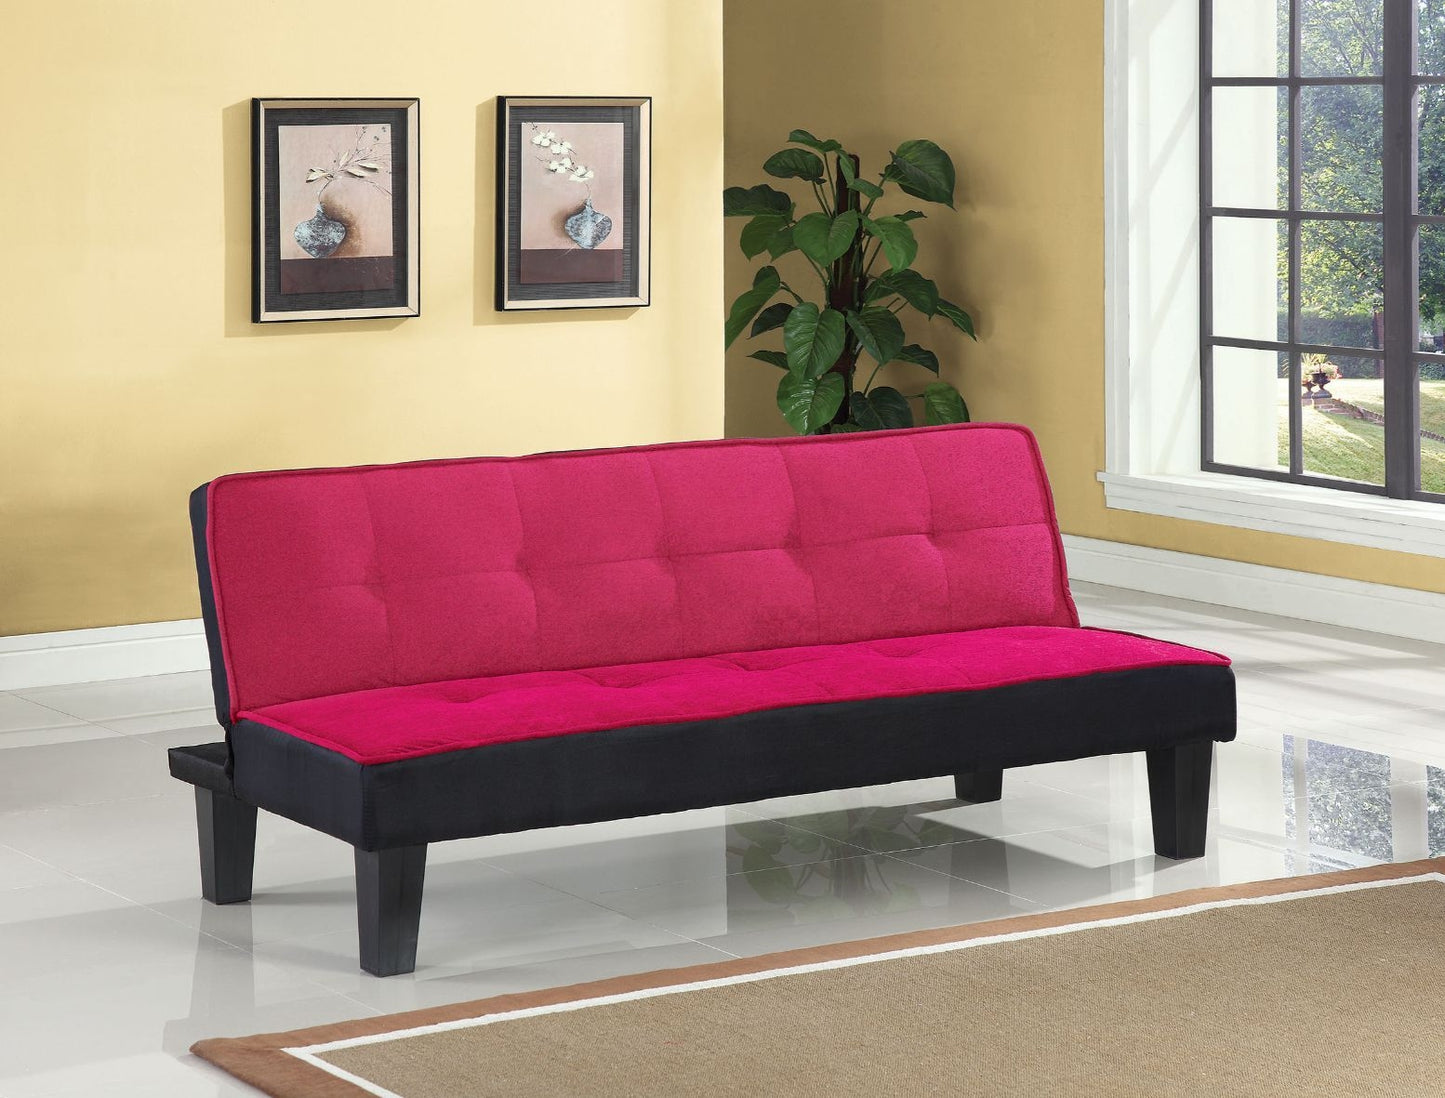 Hamar Adjustable Futon Sofa in Fuchsia by Acme